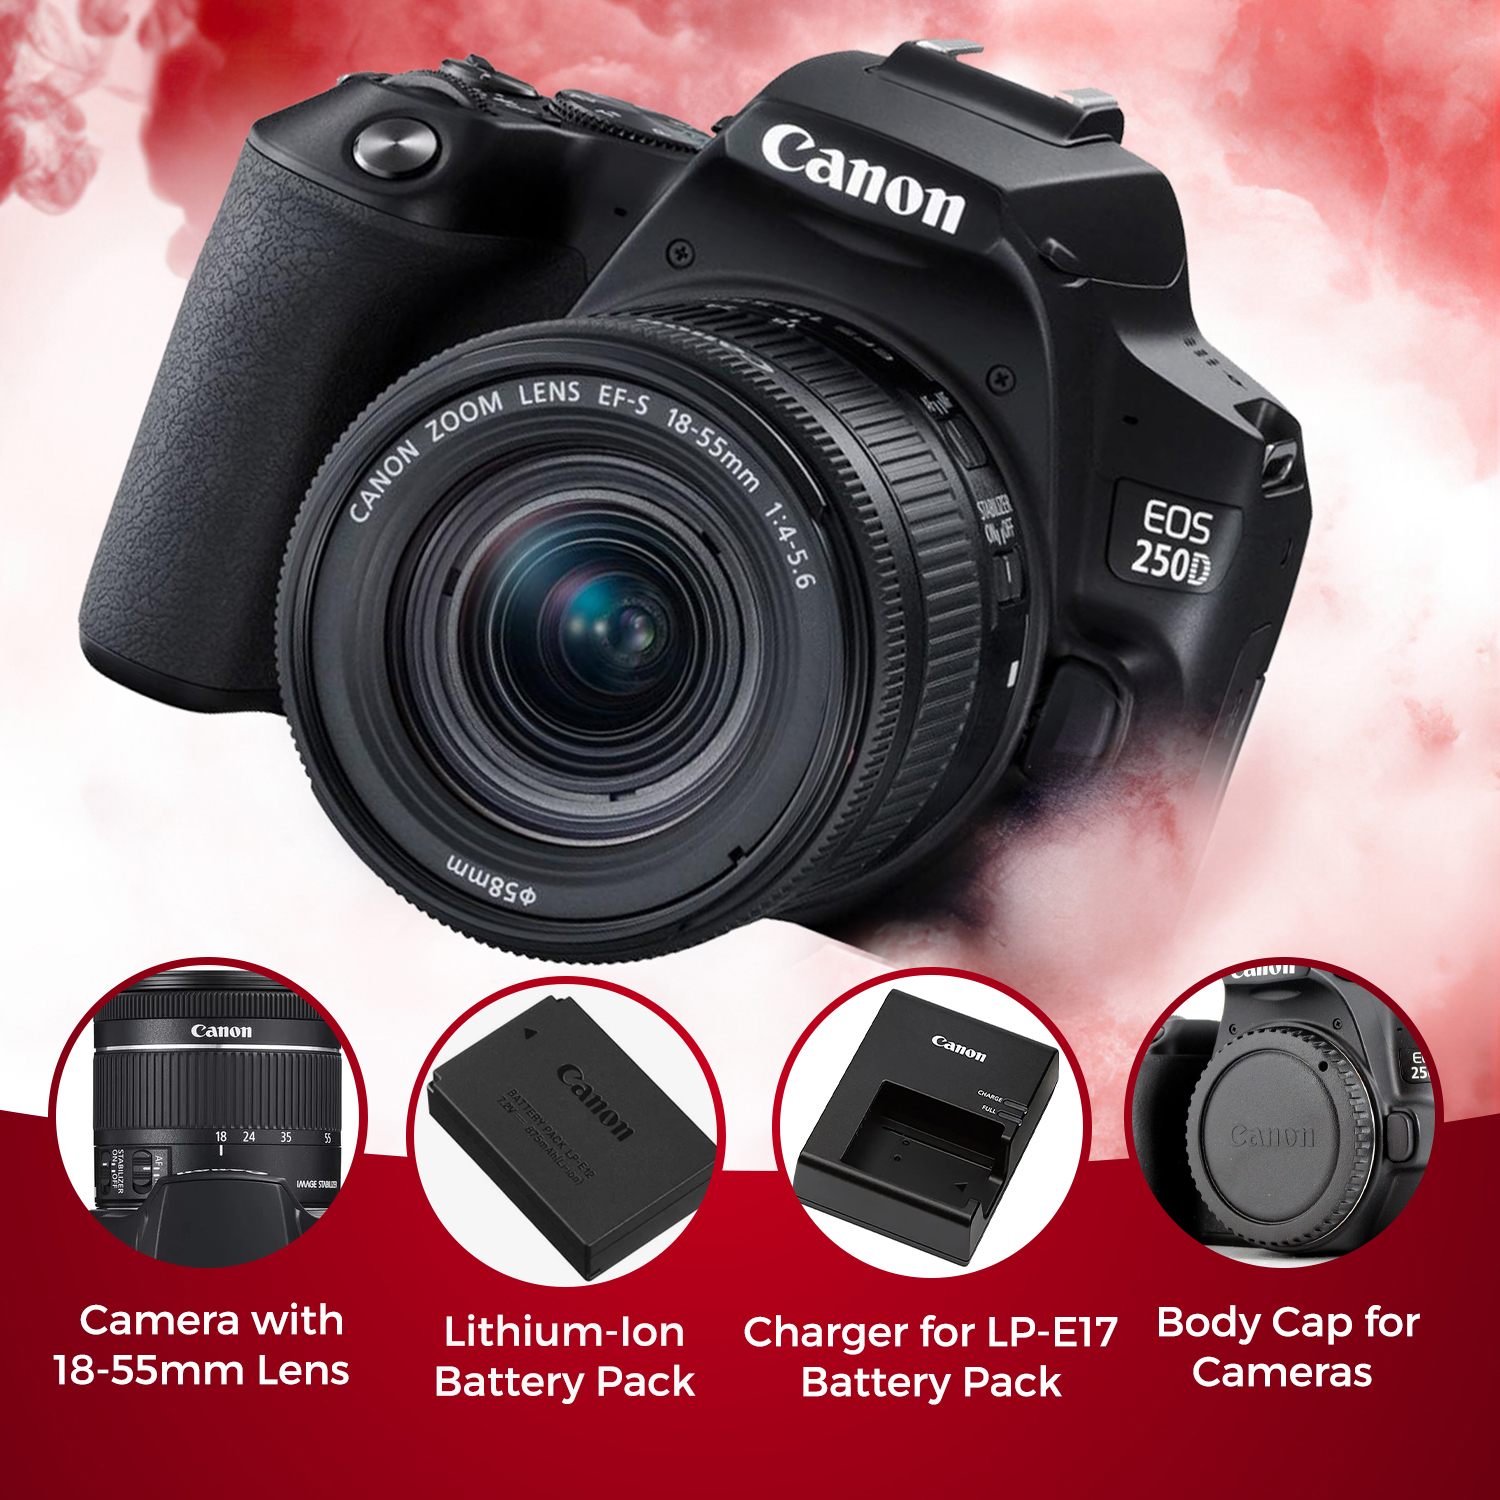 Canon EOS 250D / Rebel SL3 DSLR Camera with 18-55mm Lens (Black) + Creative Filter Set, EOS Camera Bag +  Sandisk Ultra 64GB Card + Electronics Cleaning Set, And More (International Model) - image 6 of 7